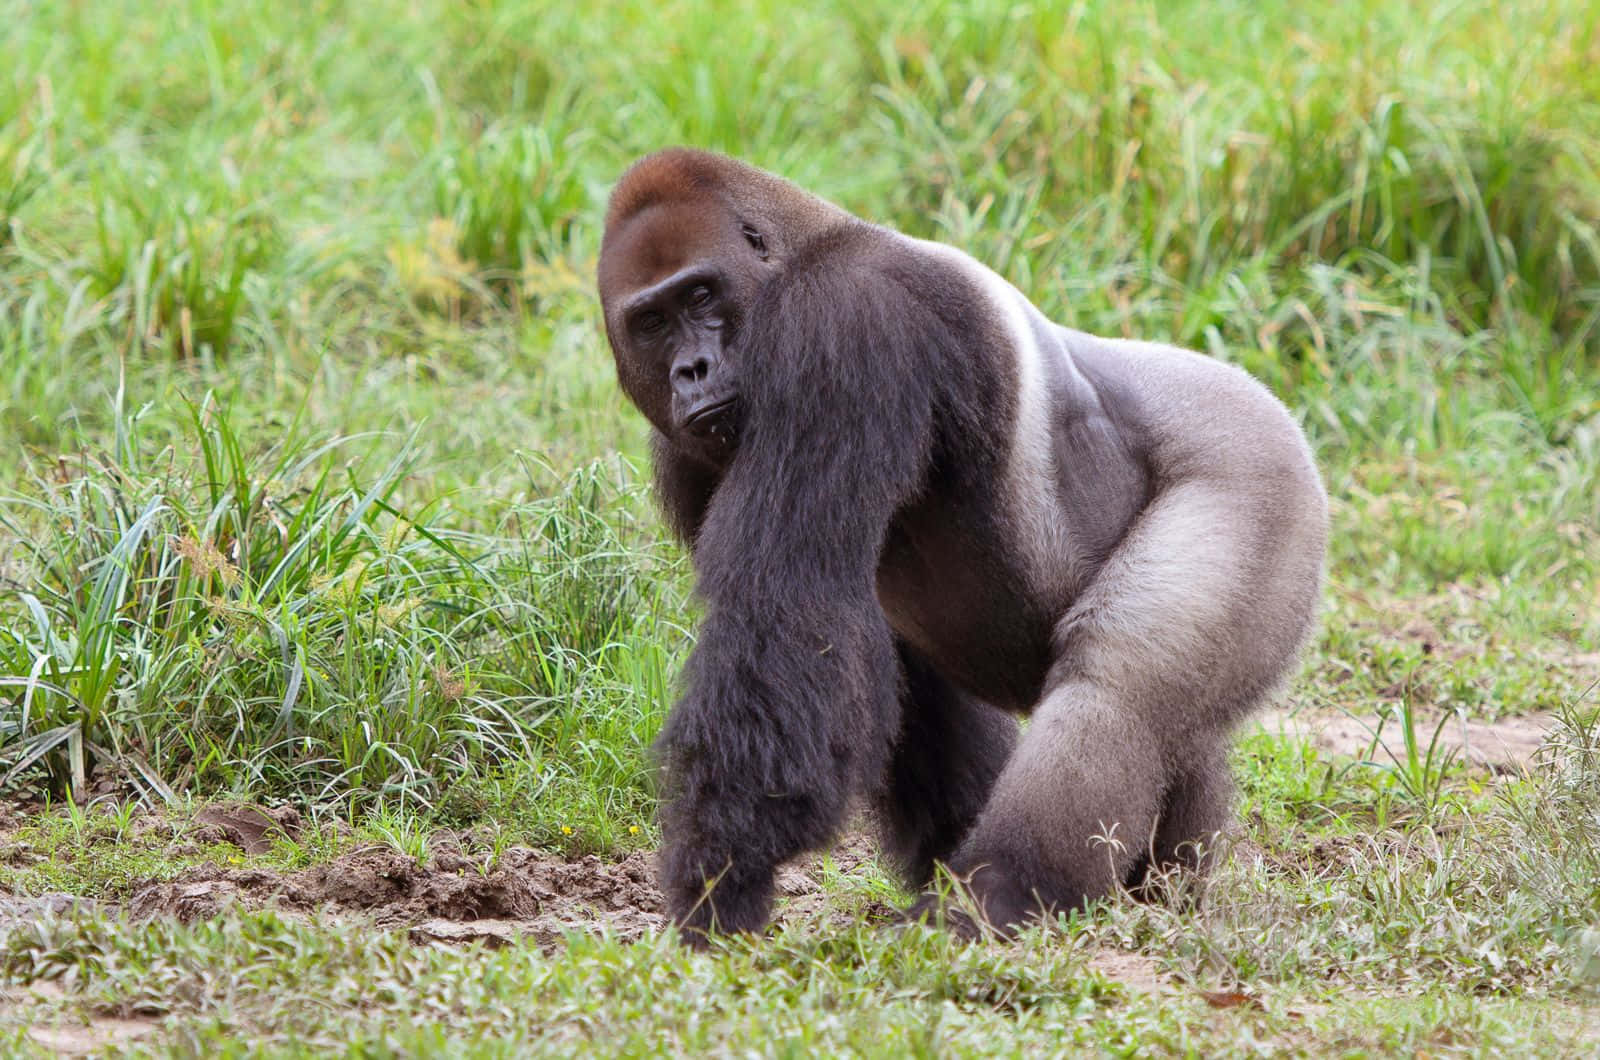 A peaceful juvenile mountain gorilla in its natural habitat